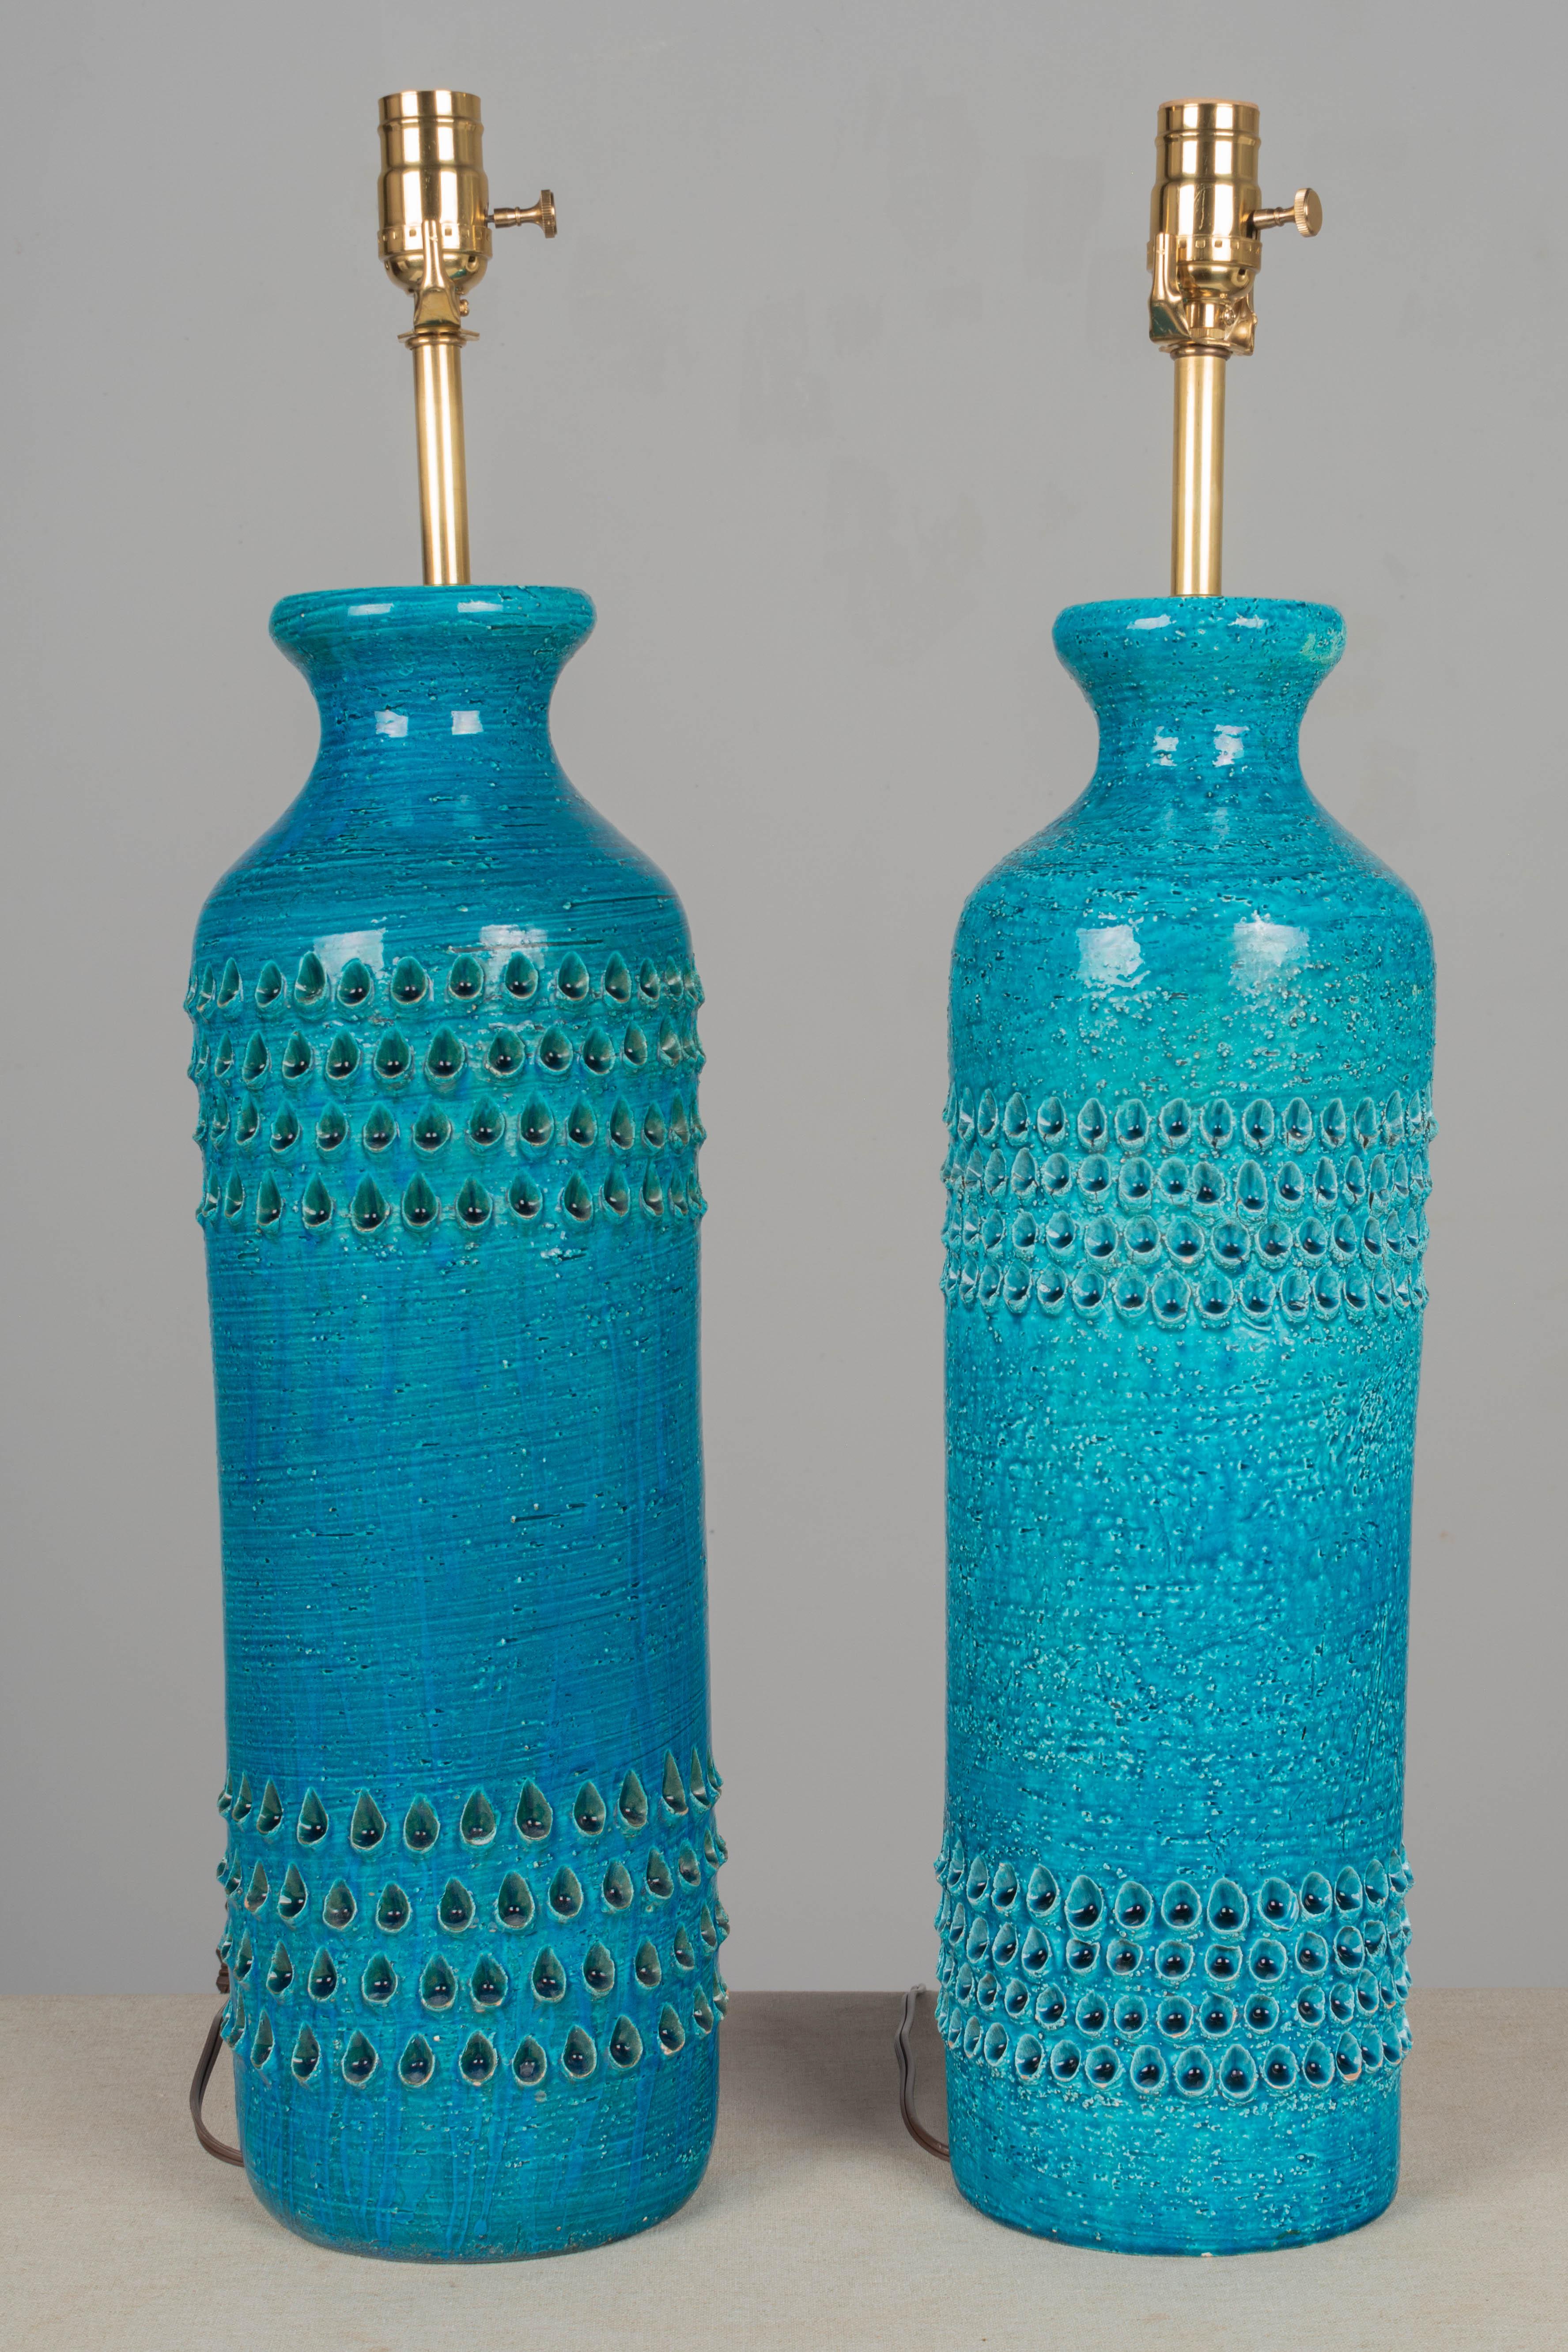 Bistossi Aldo Londi Pottery Lamps, Pair In Good Condition In Winter Park, FL